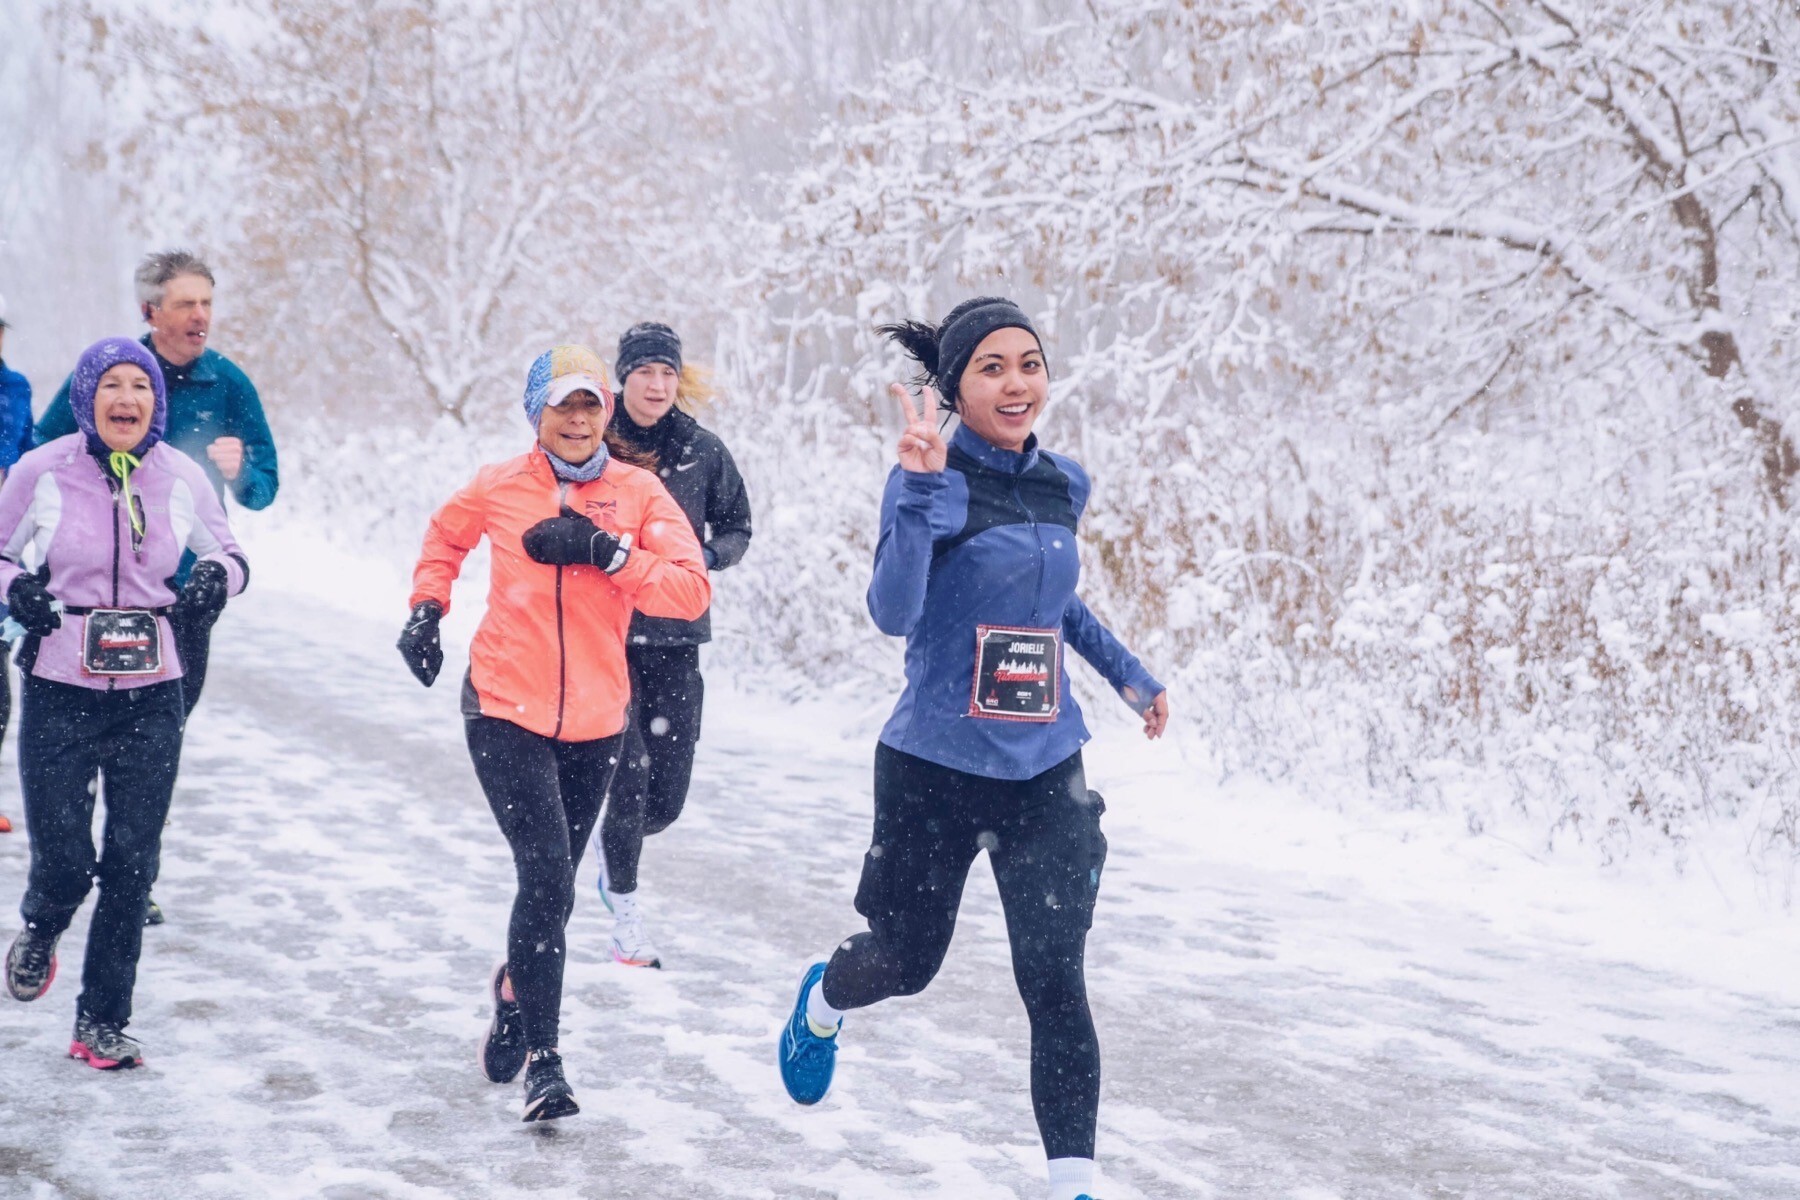 Winter jogging breaks the trend